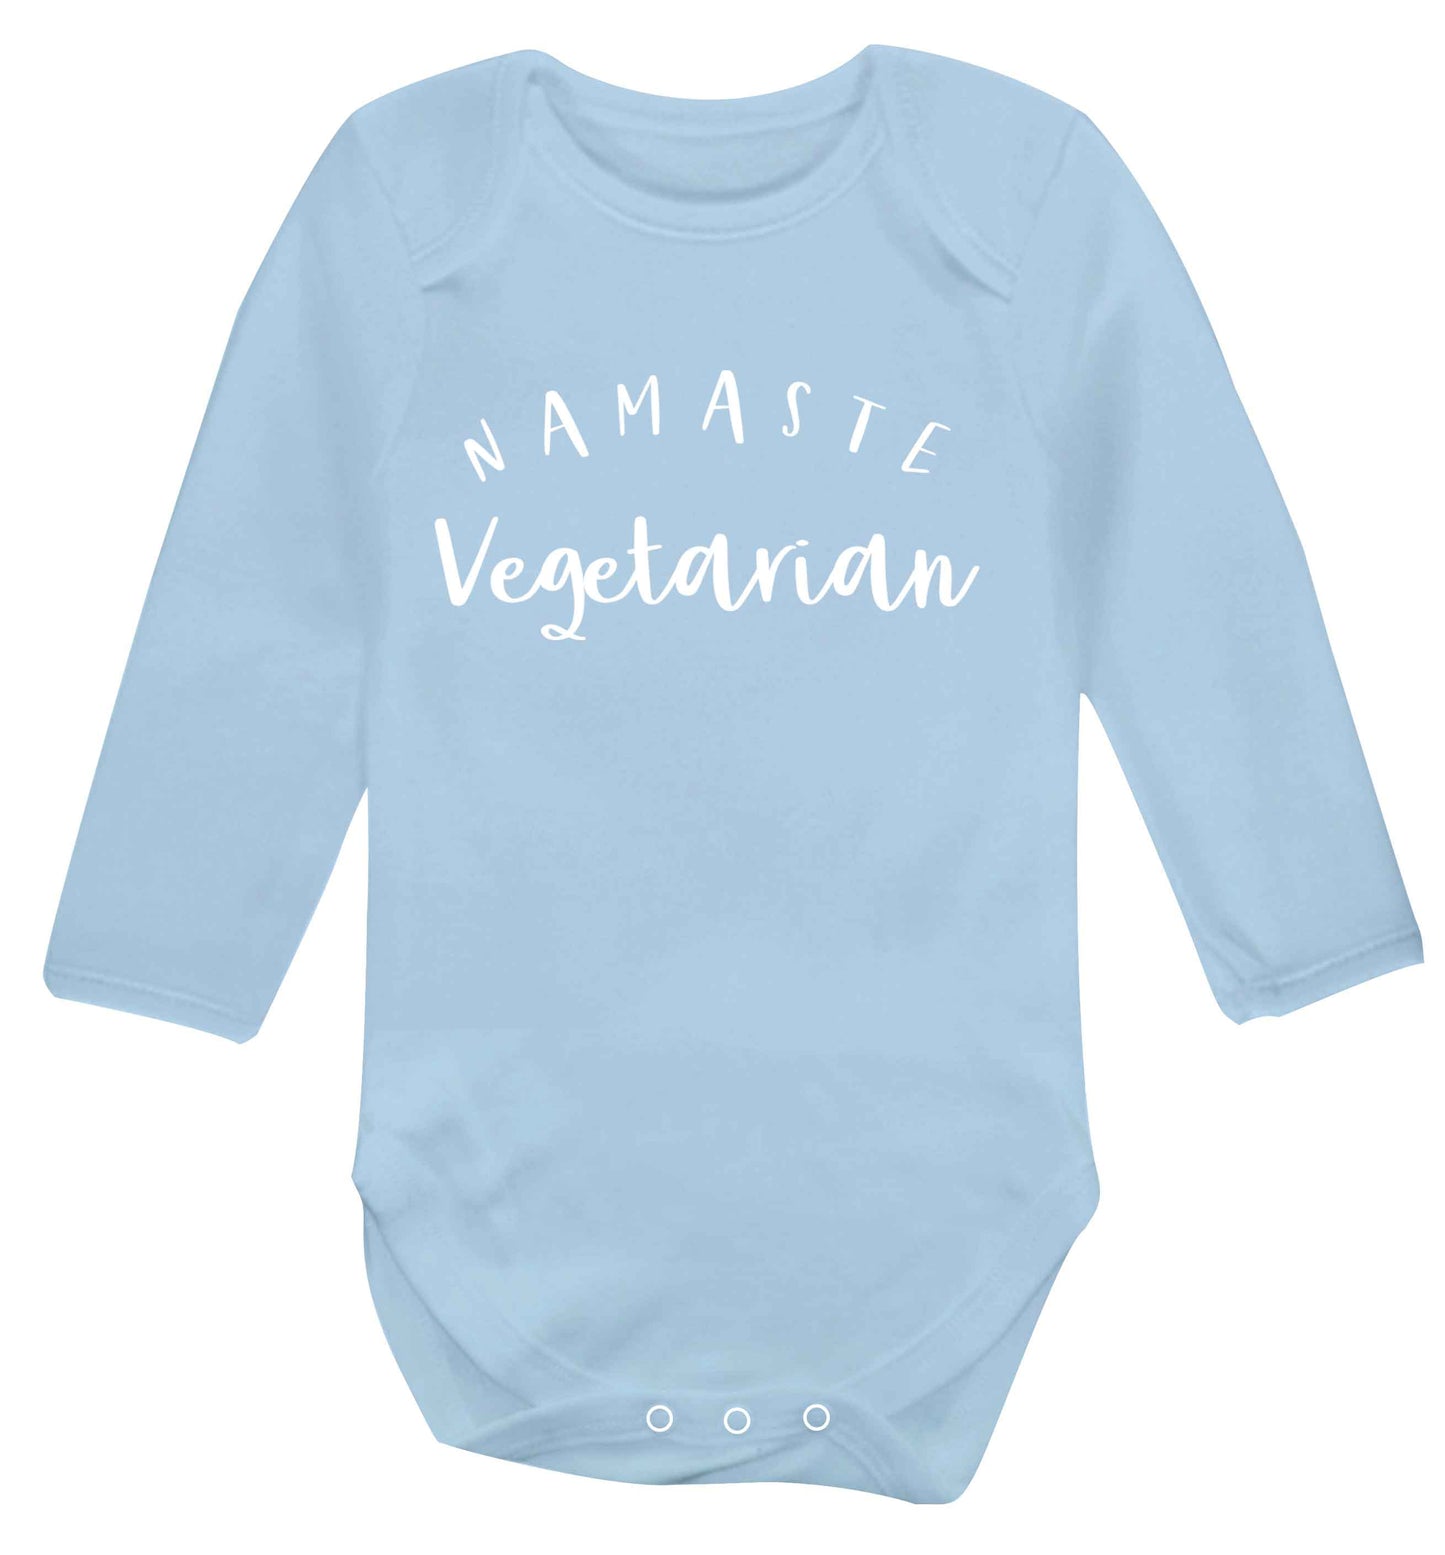 Namaste vegetarian Baby Vest long sleeved pale blue 6-12 months